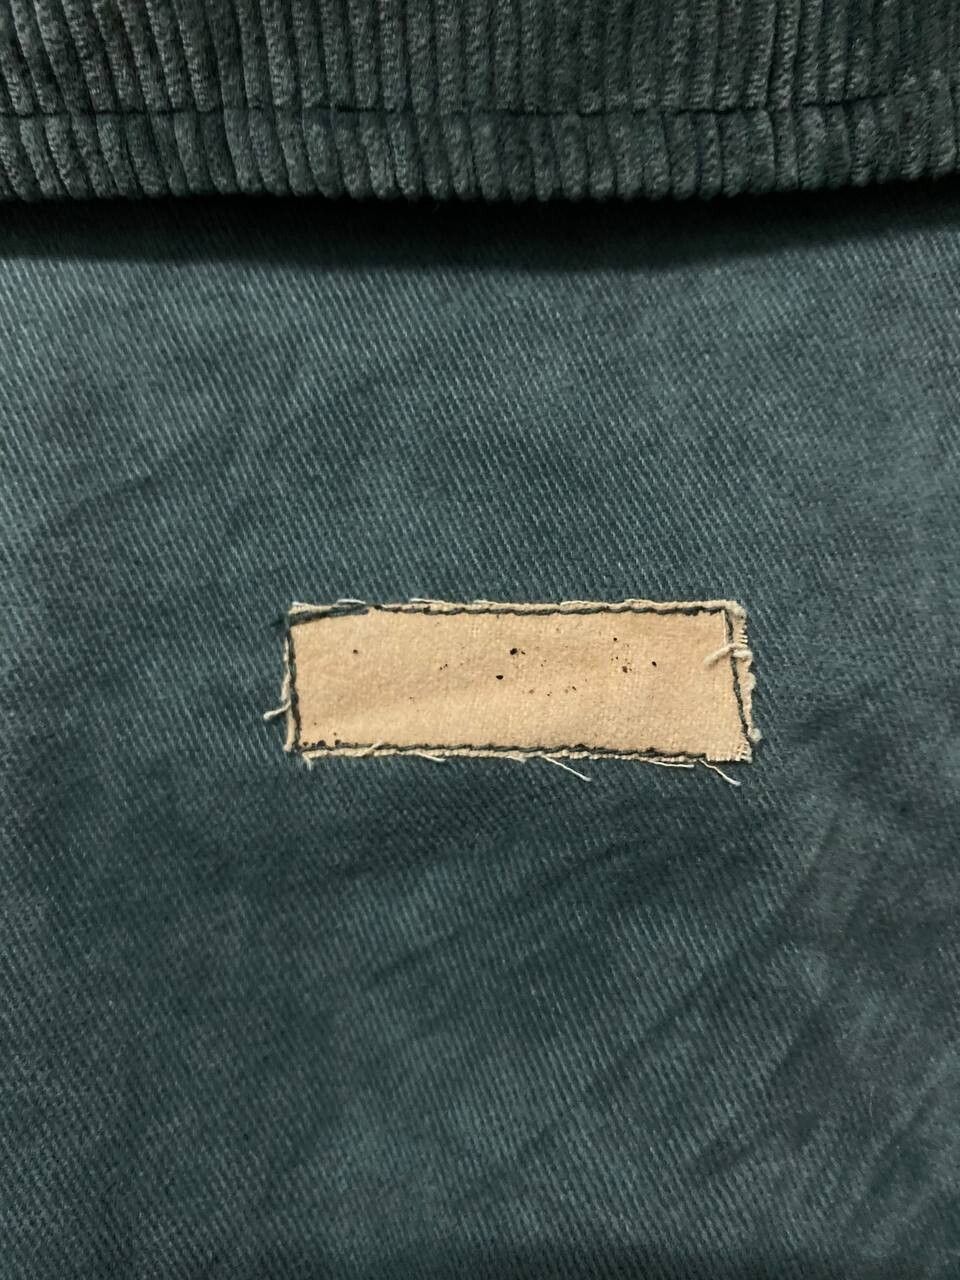 Vintage vintage lobo by pendleton khakis jacket nice design Size US M / EU 48-50 / 2 - 5 Preview